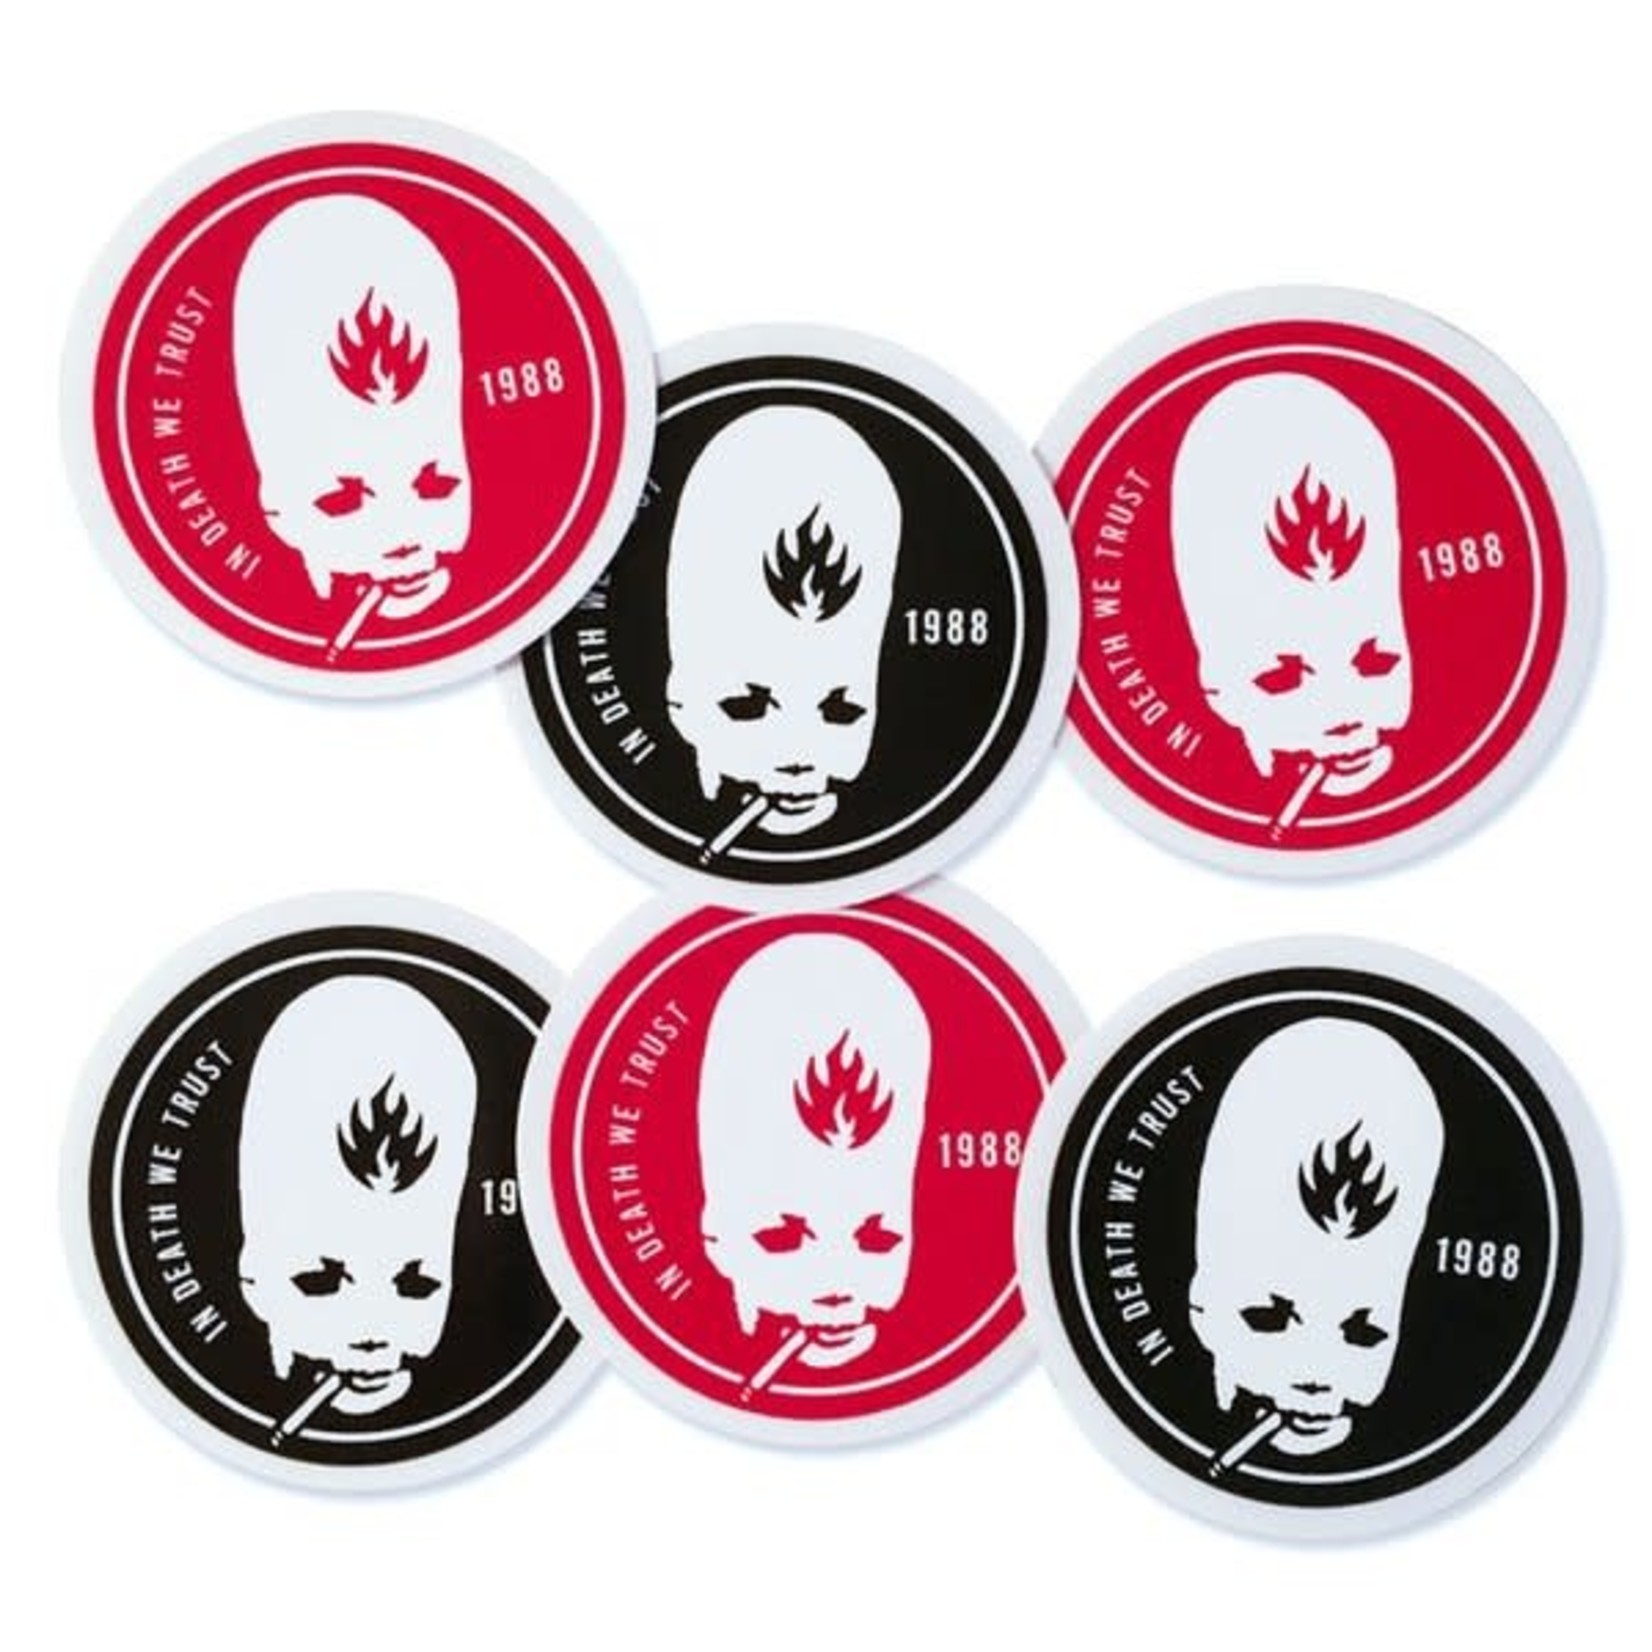 Black Label Black Label Thumbhead Sticker - Assorted Colors